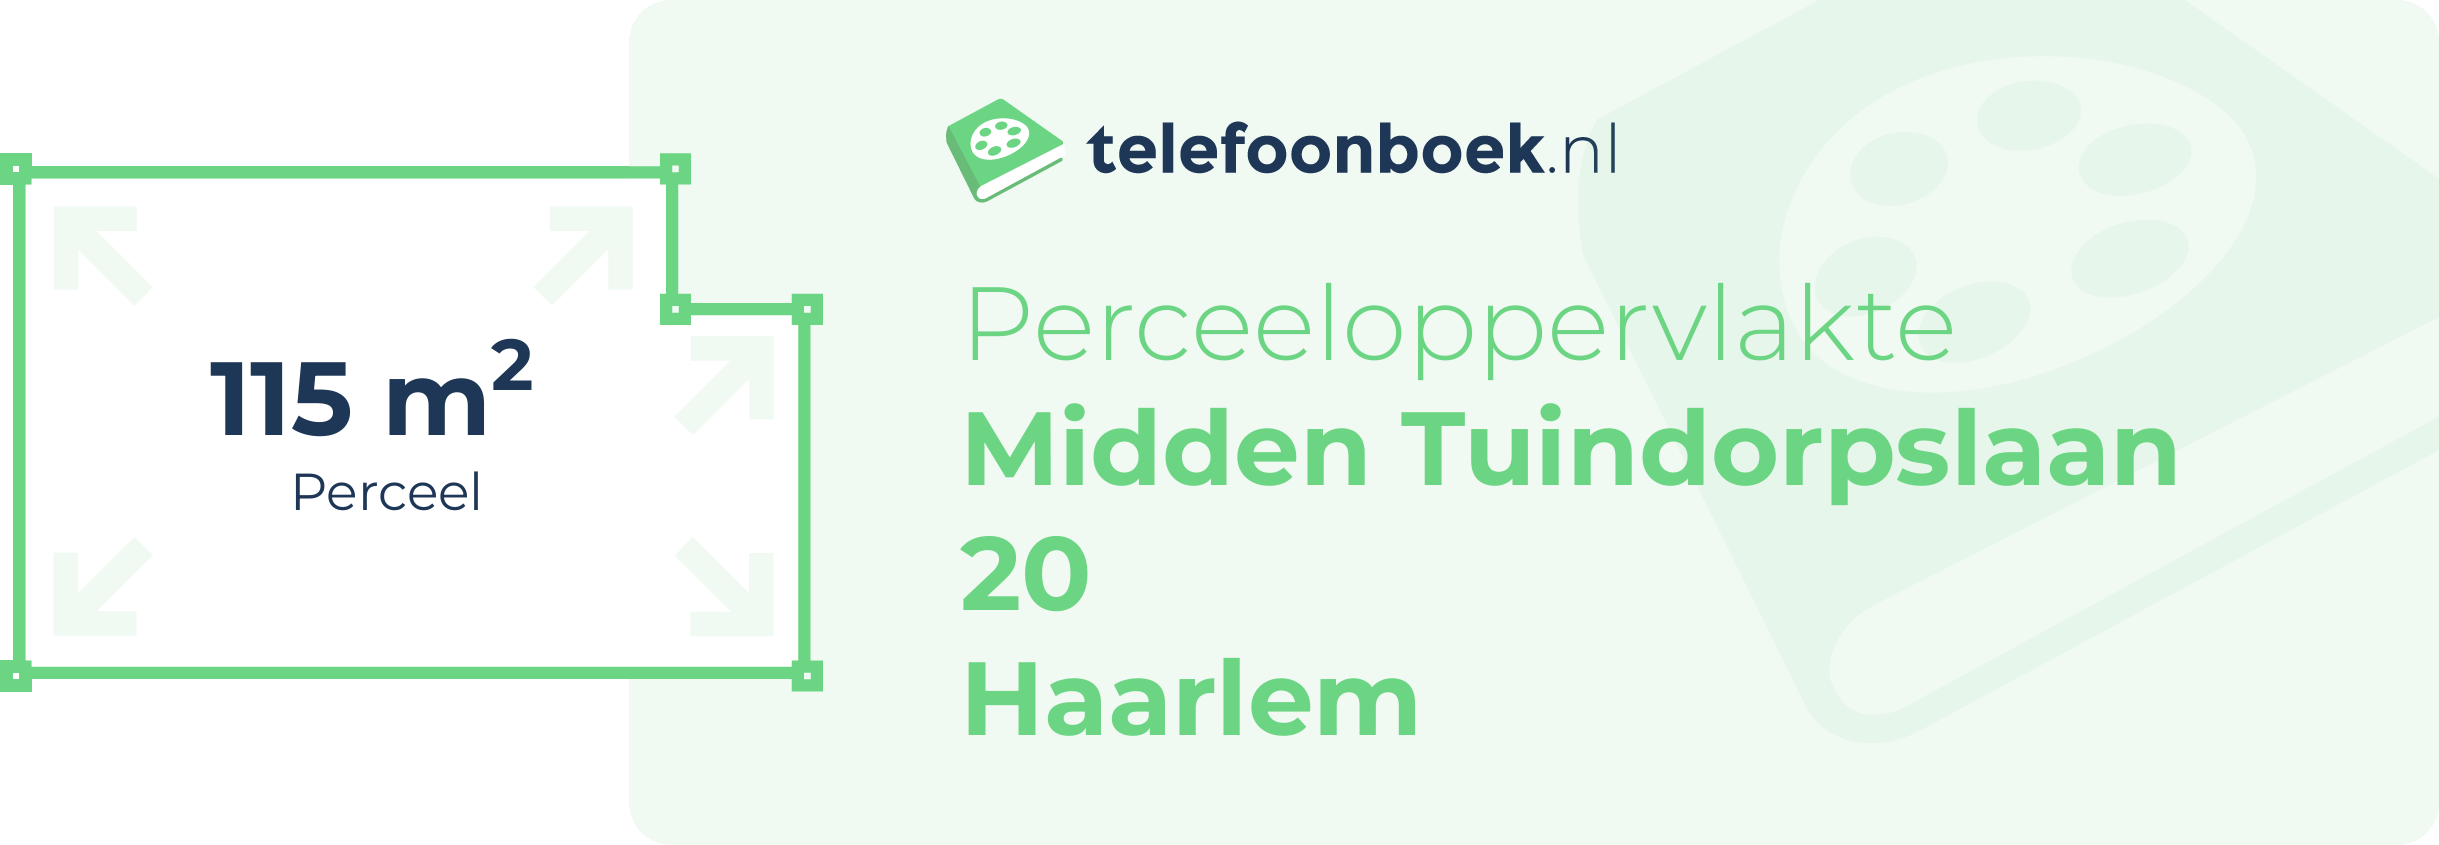 Perceeloppervlakte Midden Tuindorpslaan 20 Haarlem